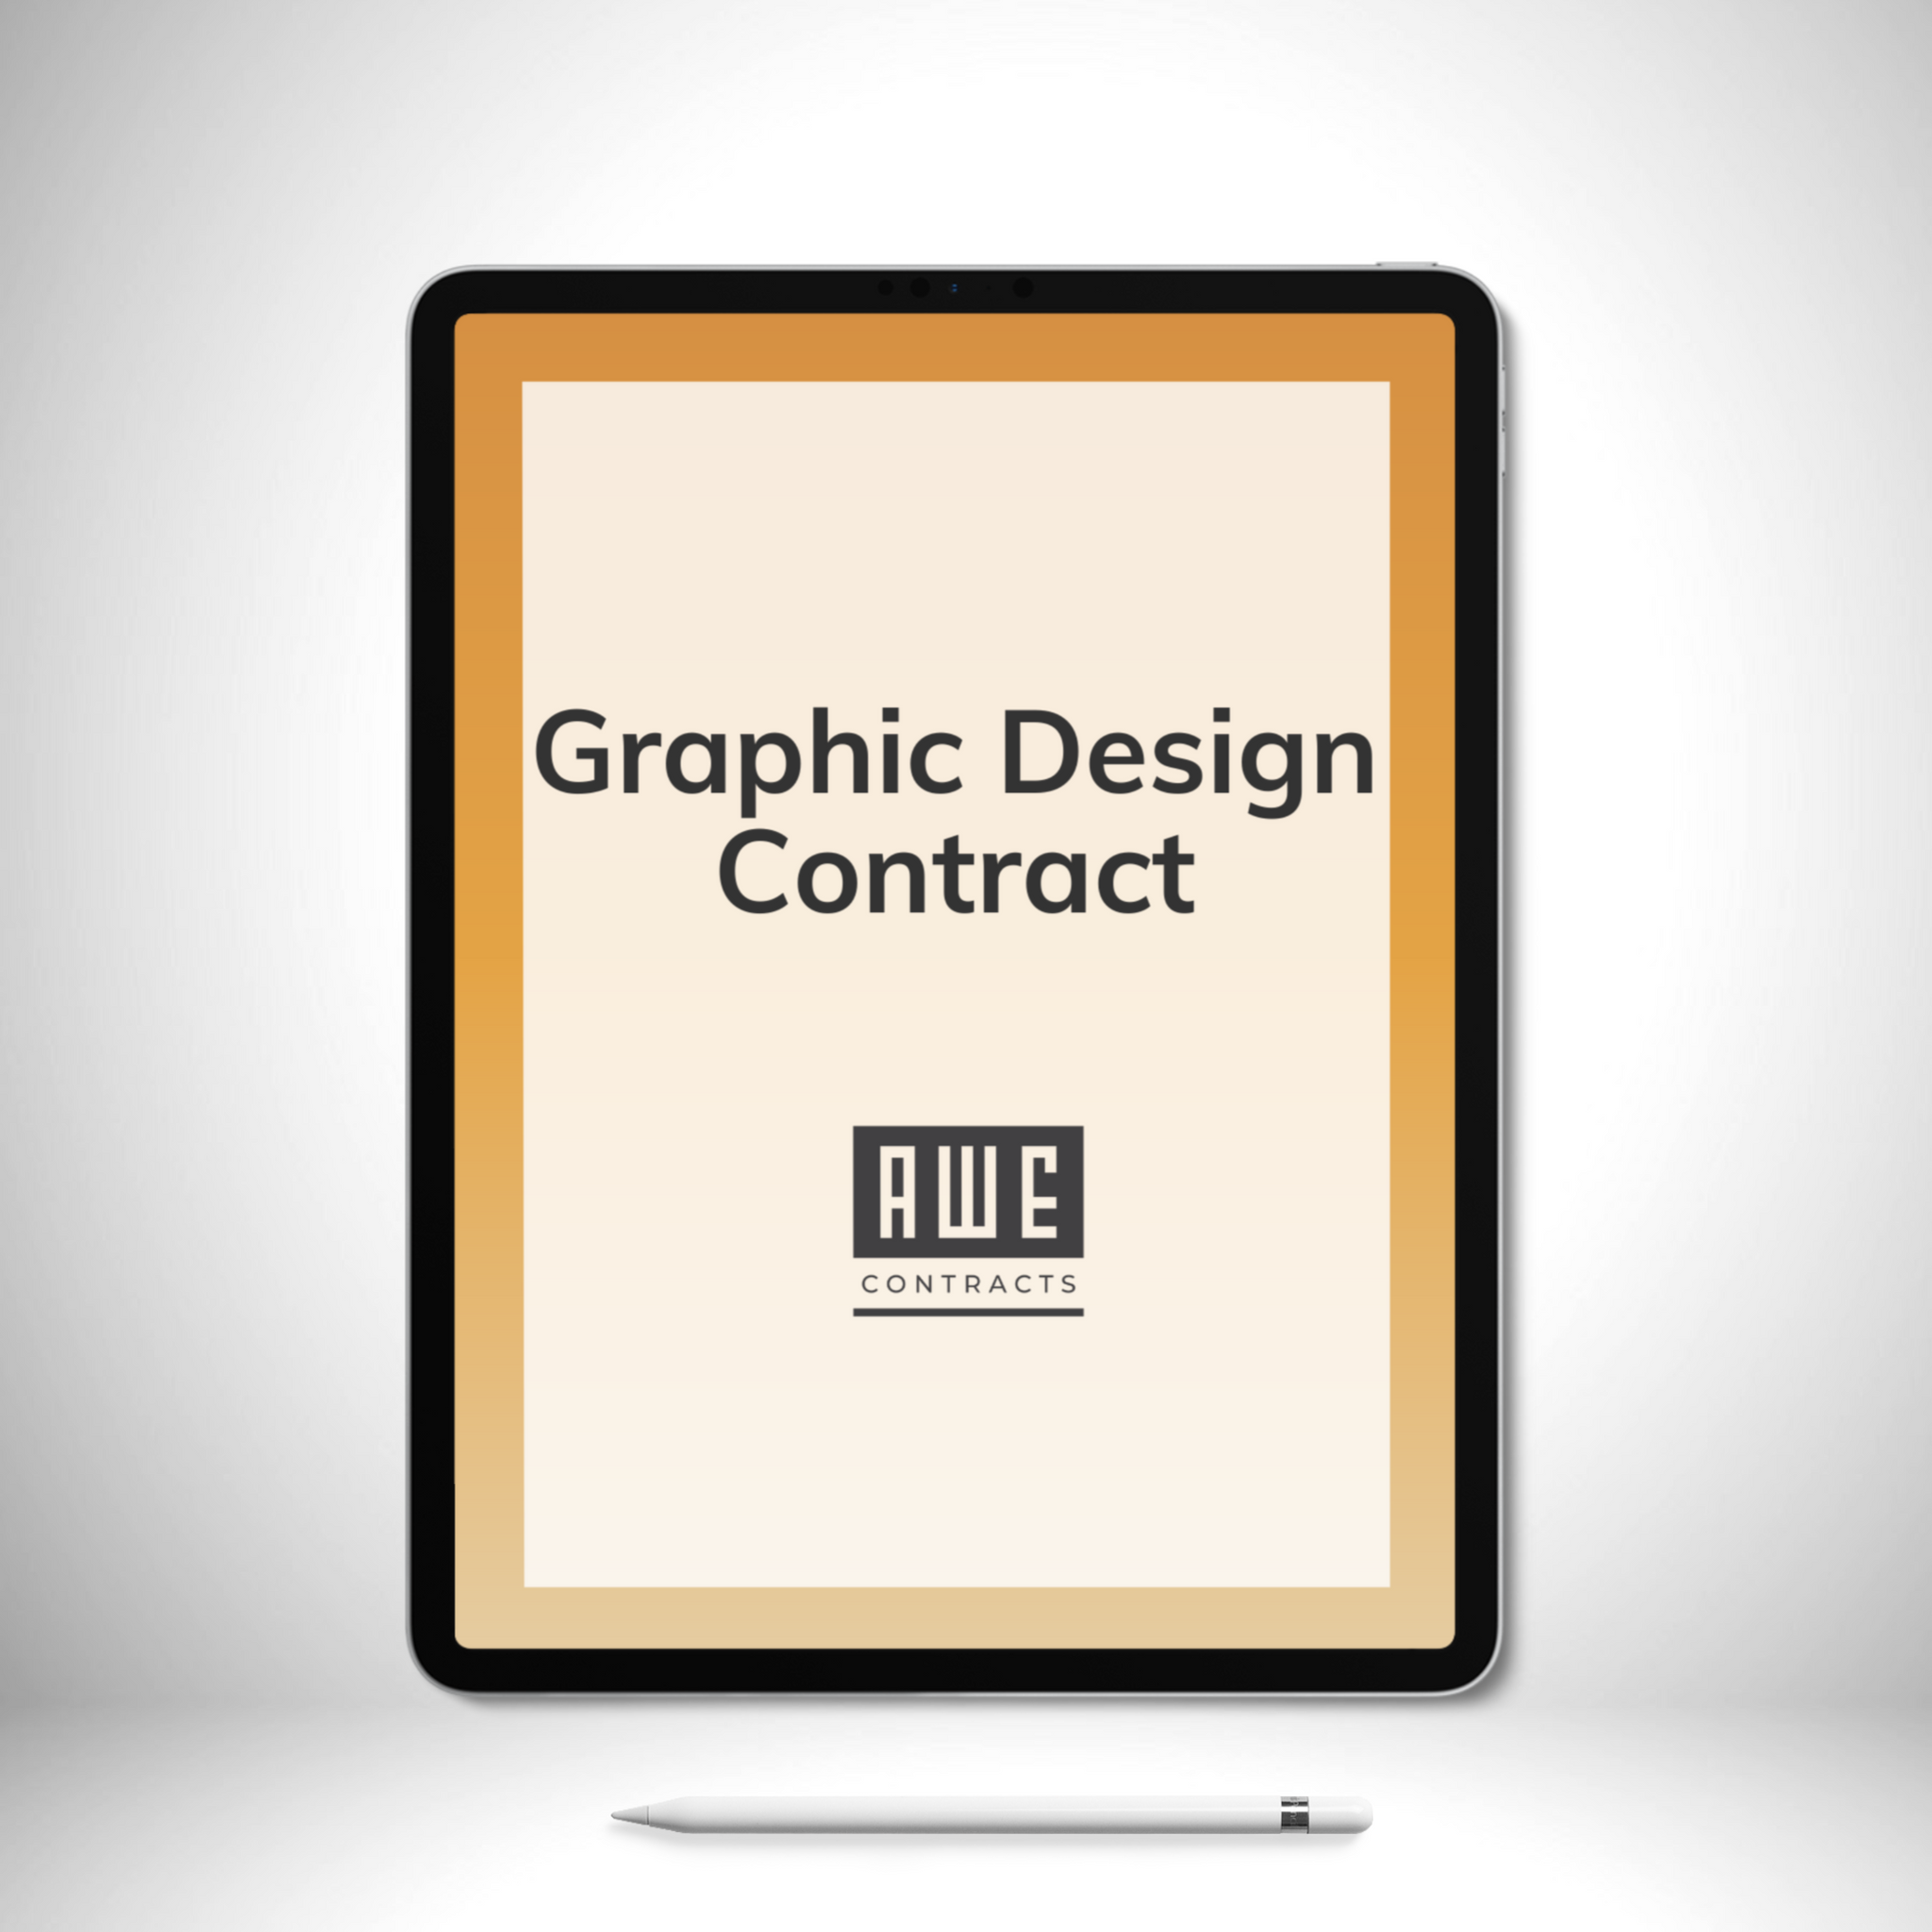 Graphic Design Contract